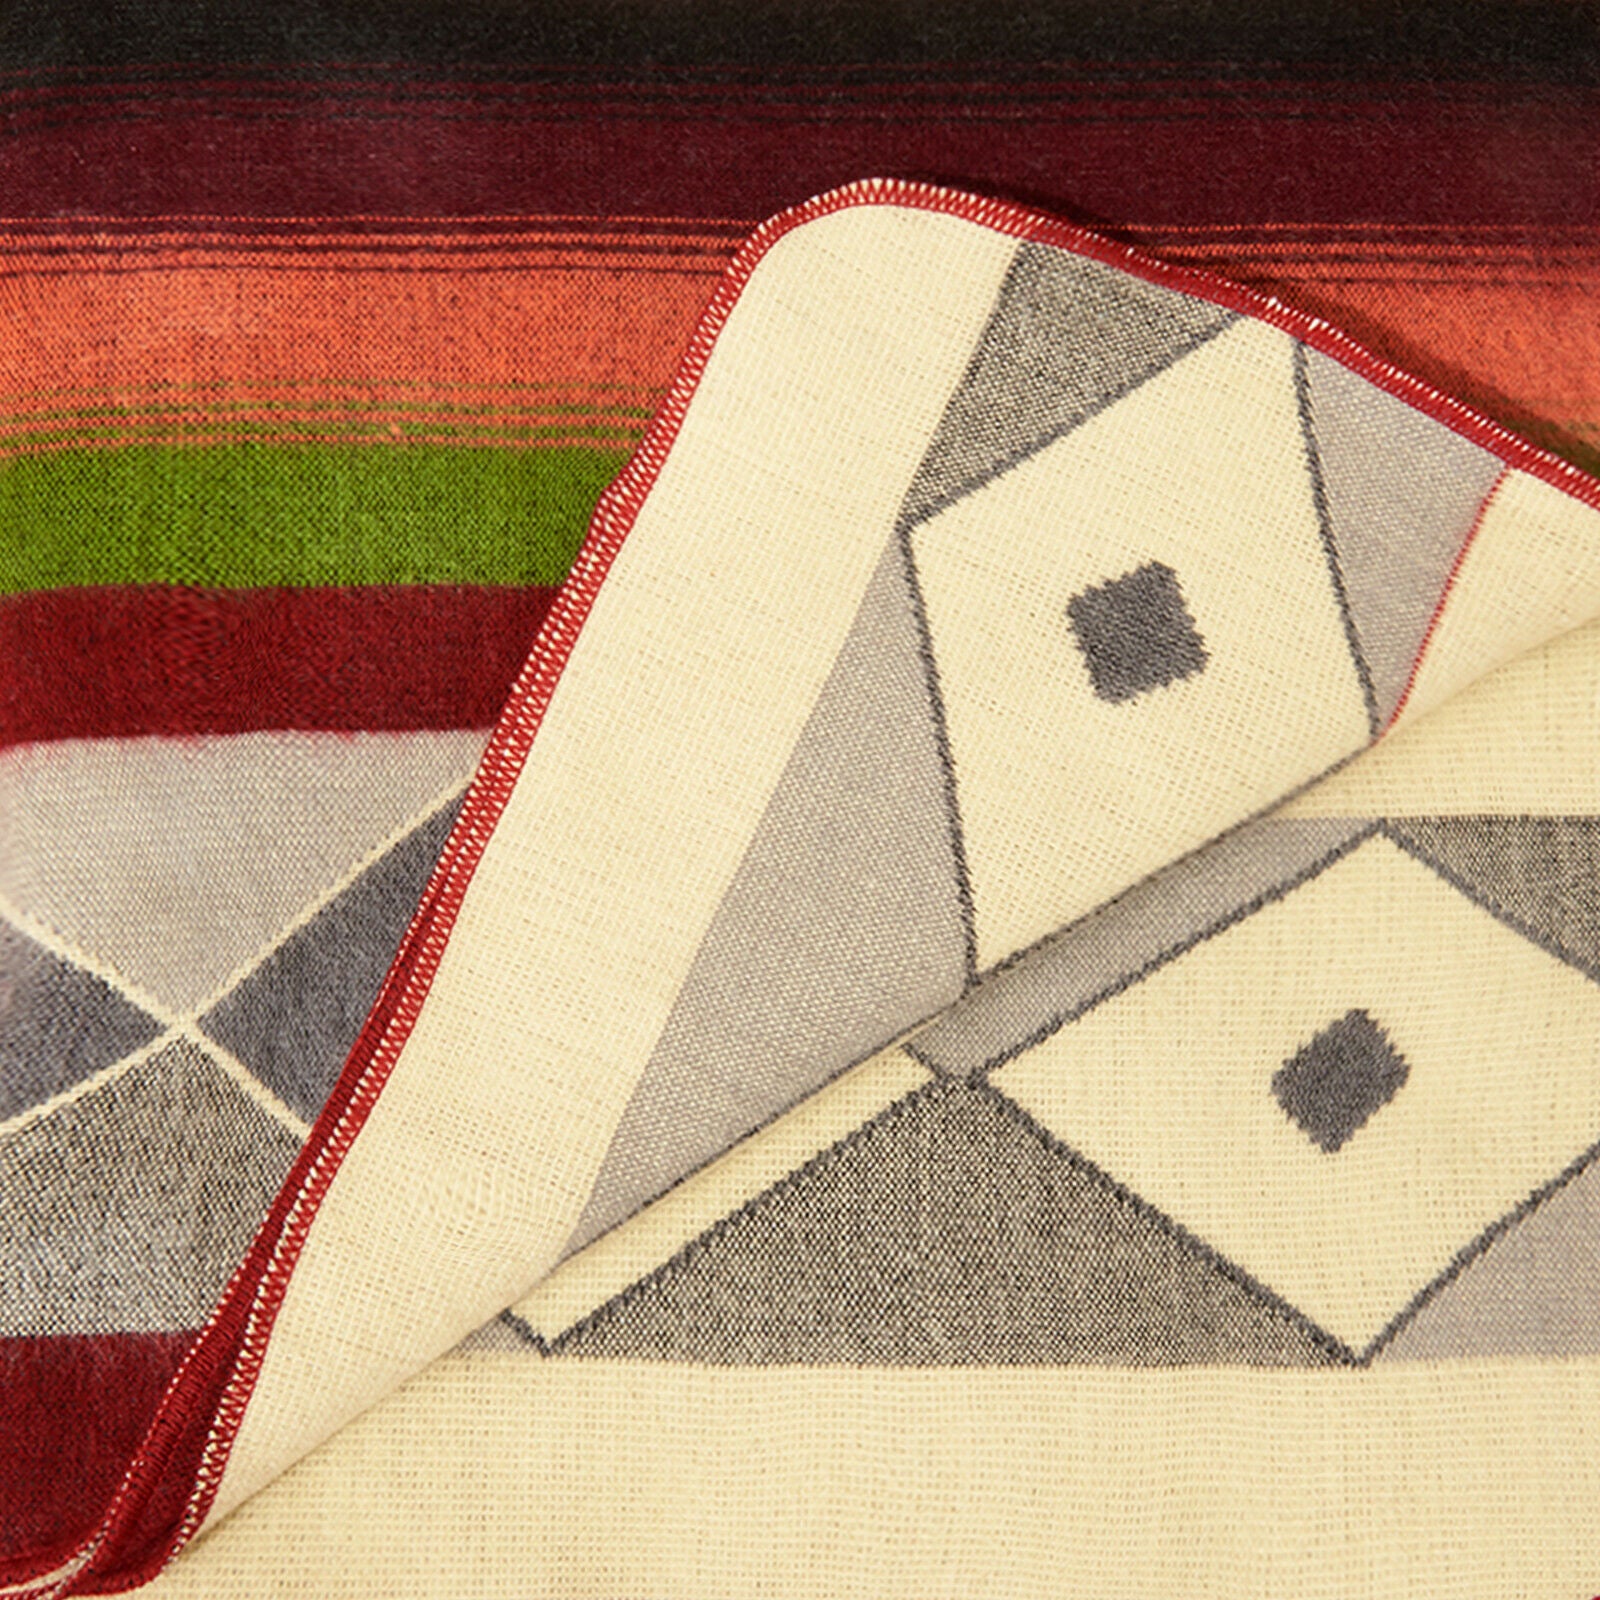 Cumbaratza - Baby Alpaca Blanket - Thick Extra Large Reversible - Aztec Southwest Pattern Red